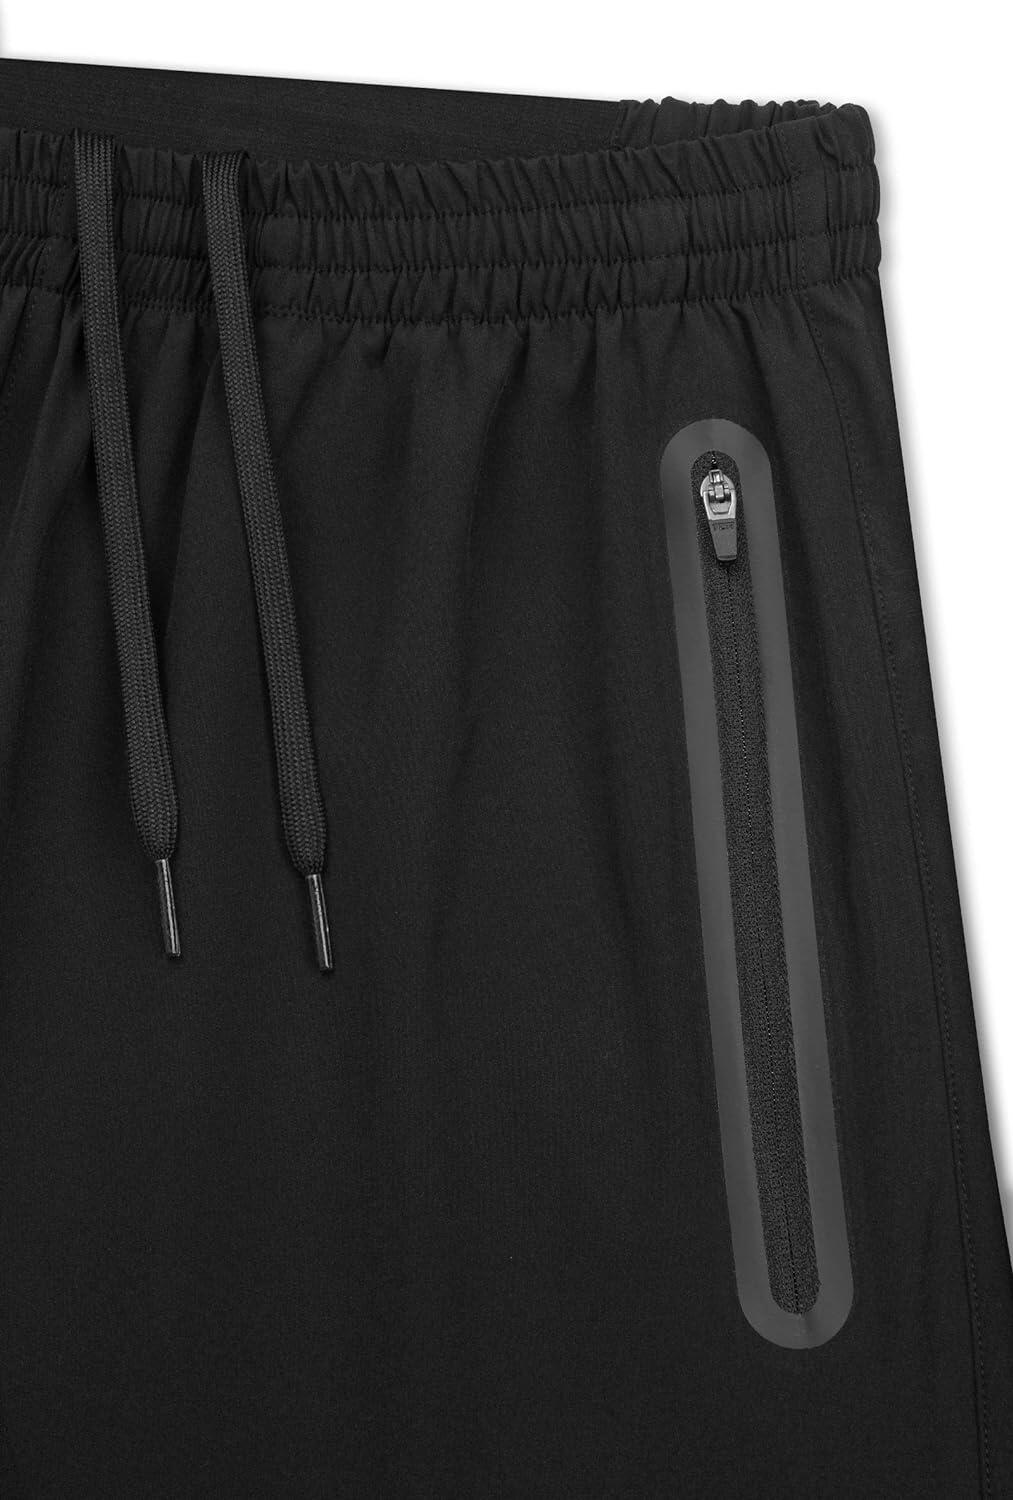 Men's Elite Tech Lightweight Running Shorts with Zip Pockets - Black/Black 3/6